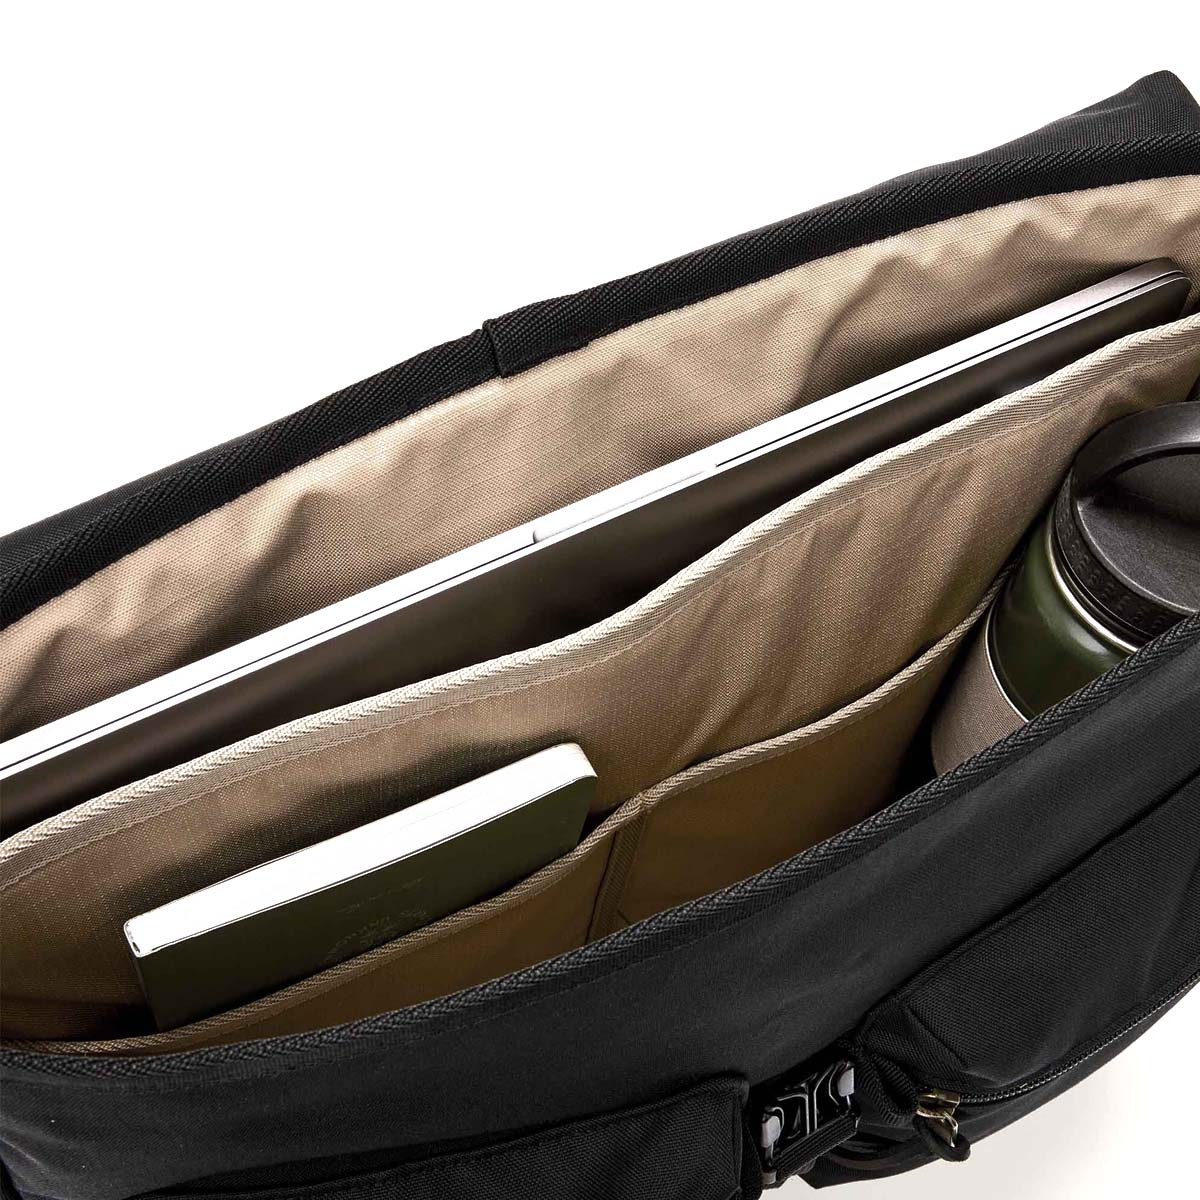 Filson Surveyor Messenger Bag Black, features a padded laptop compartment